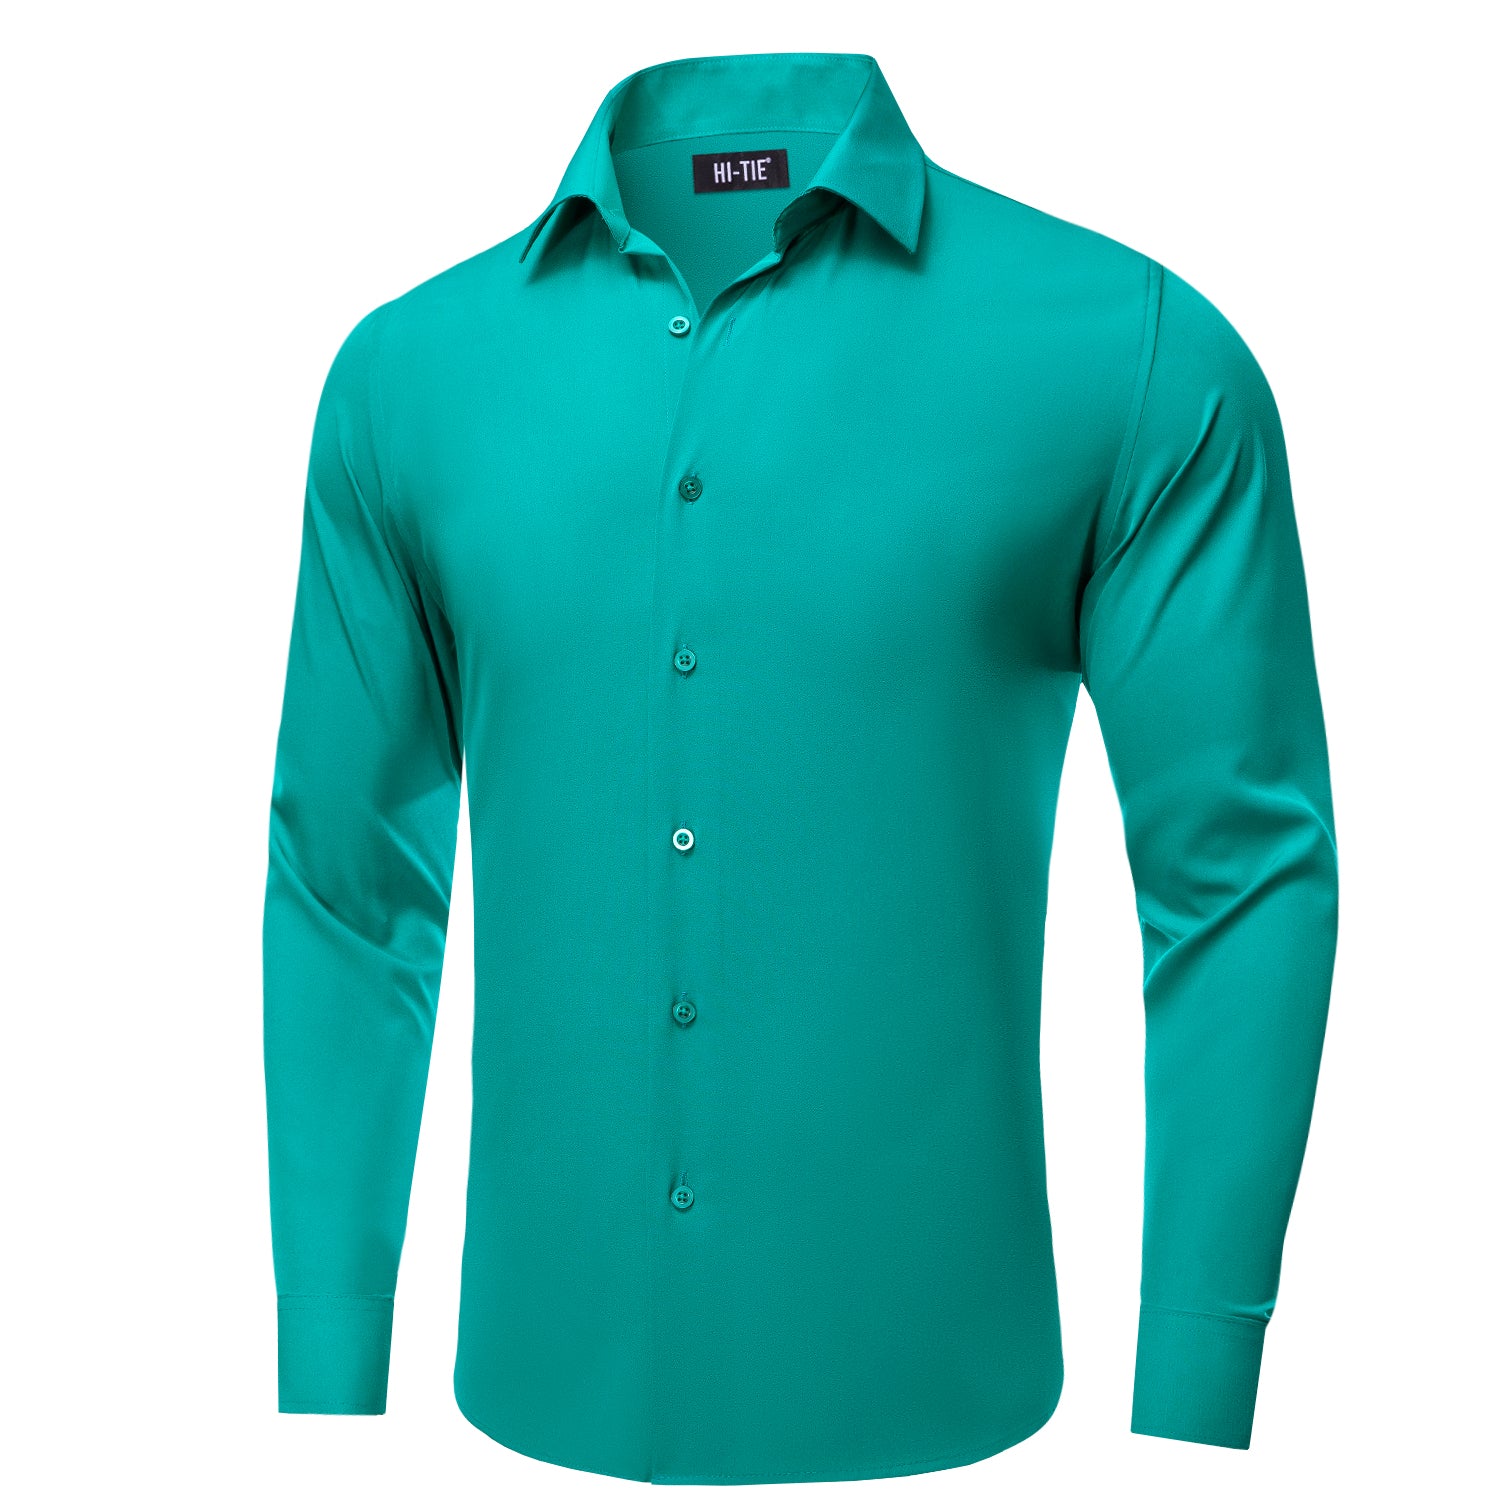 Hi-Tie Long Sleeve Shirt DarkCyan Teal Blue Solid Casual Men's Dress Shirt Top Wear